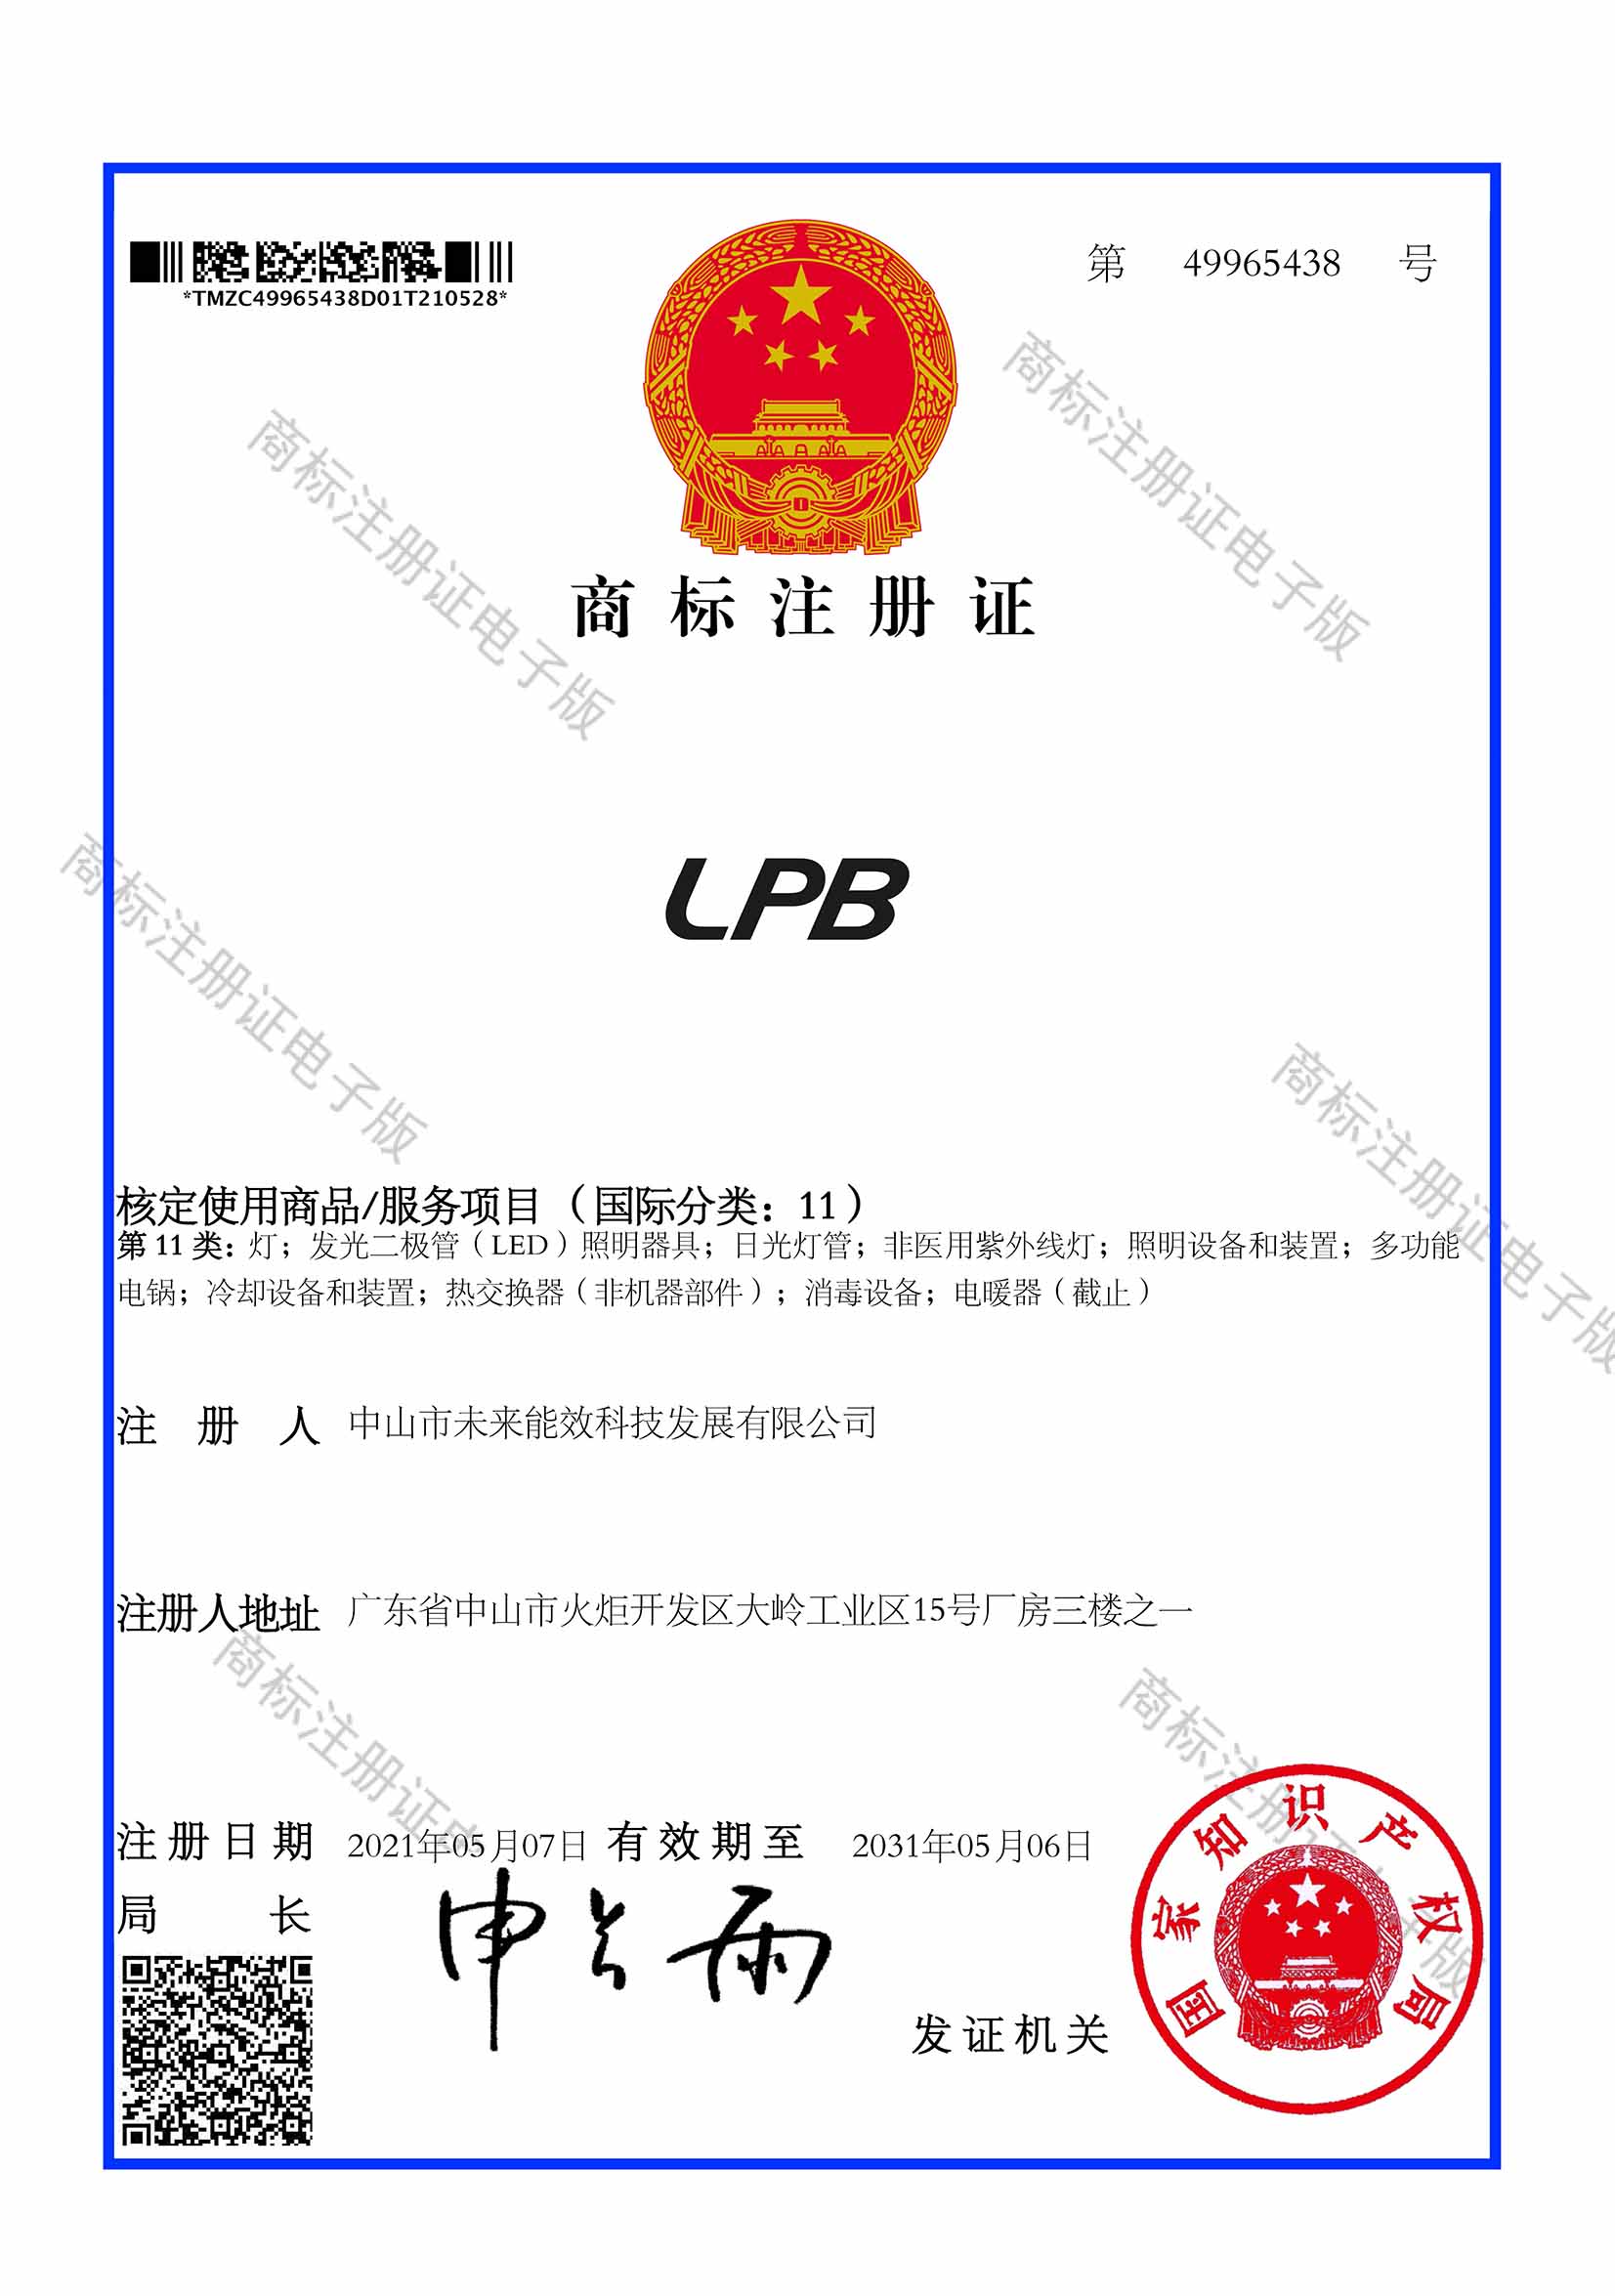 lpb商标注册证.jpg